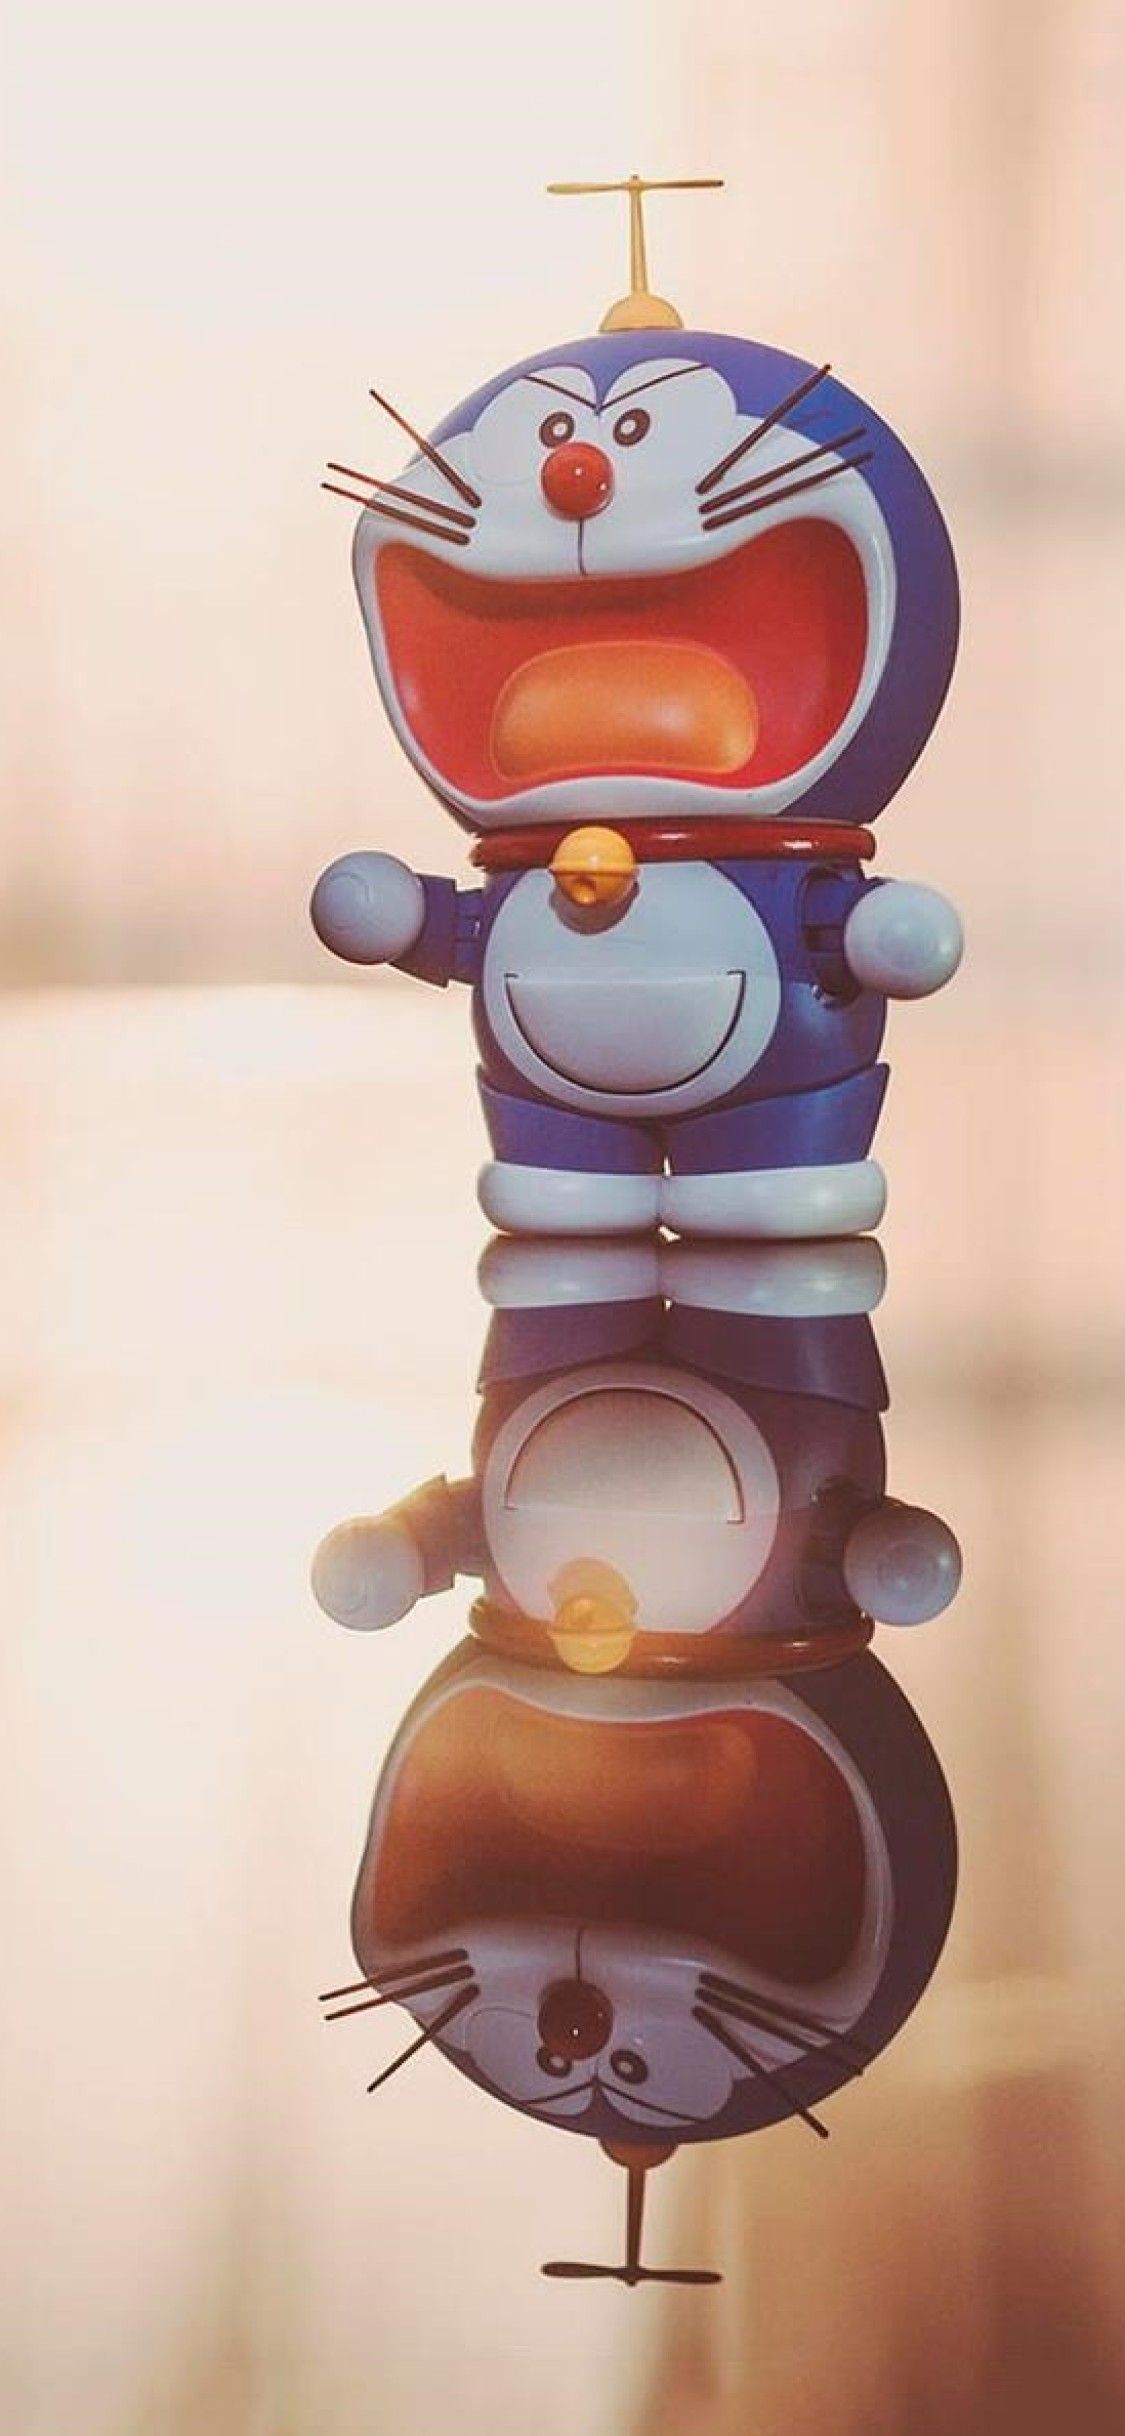 Doraemon Toy iPhone XS, iPhone iPhone X HD 4k